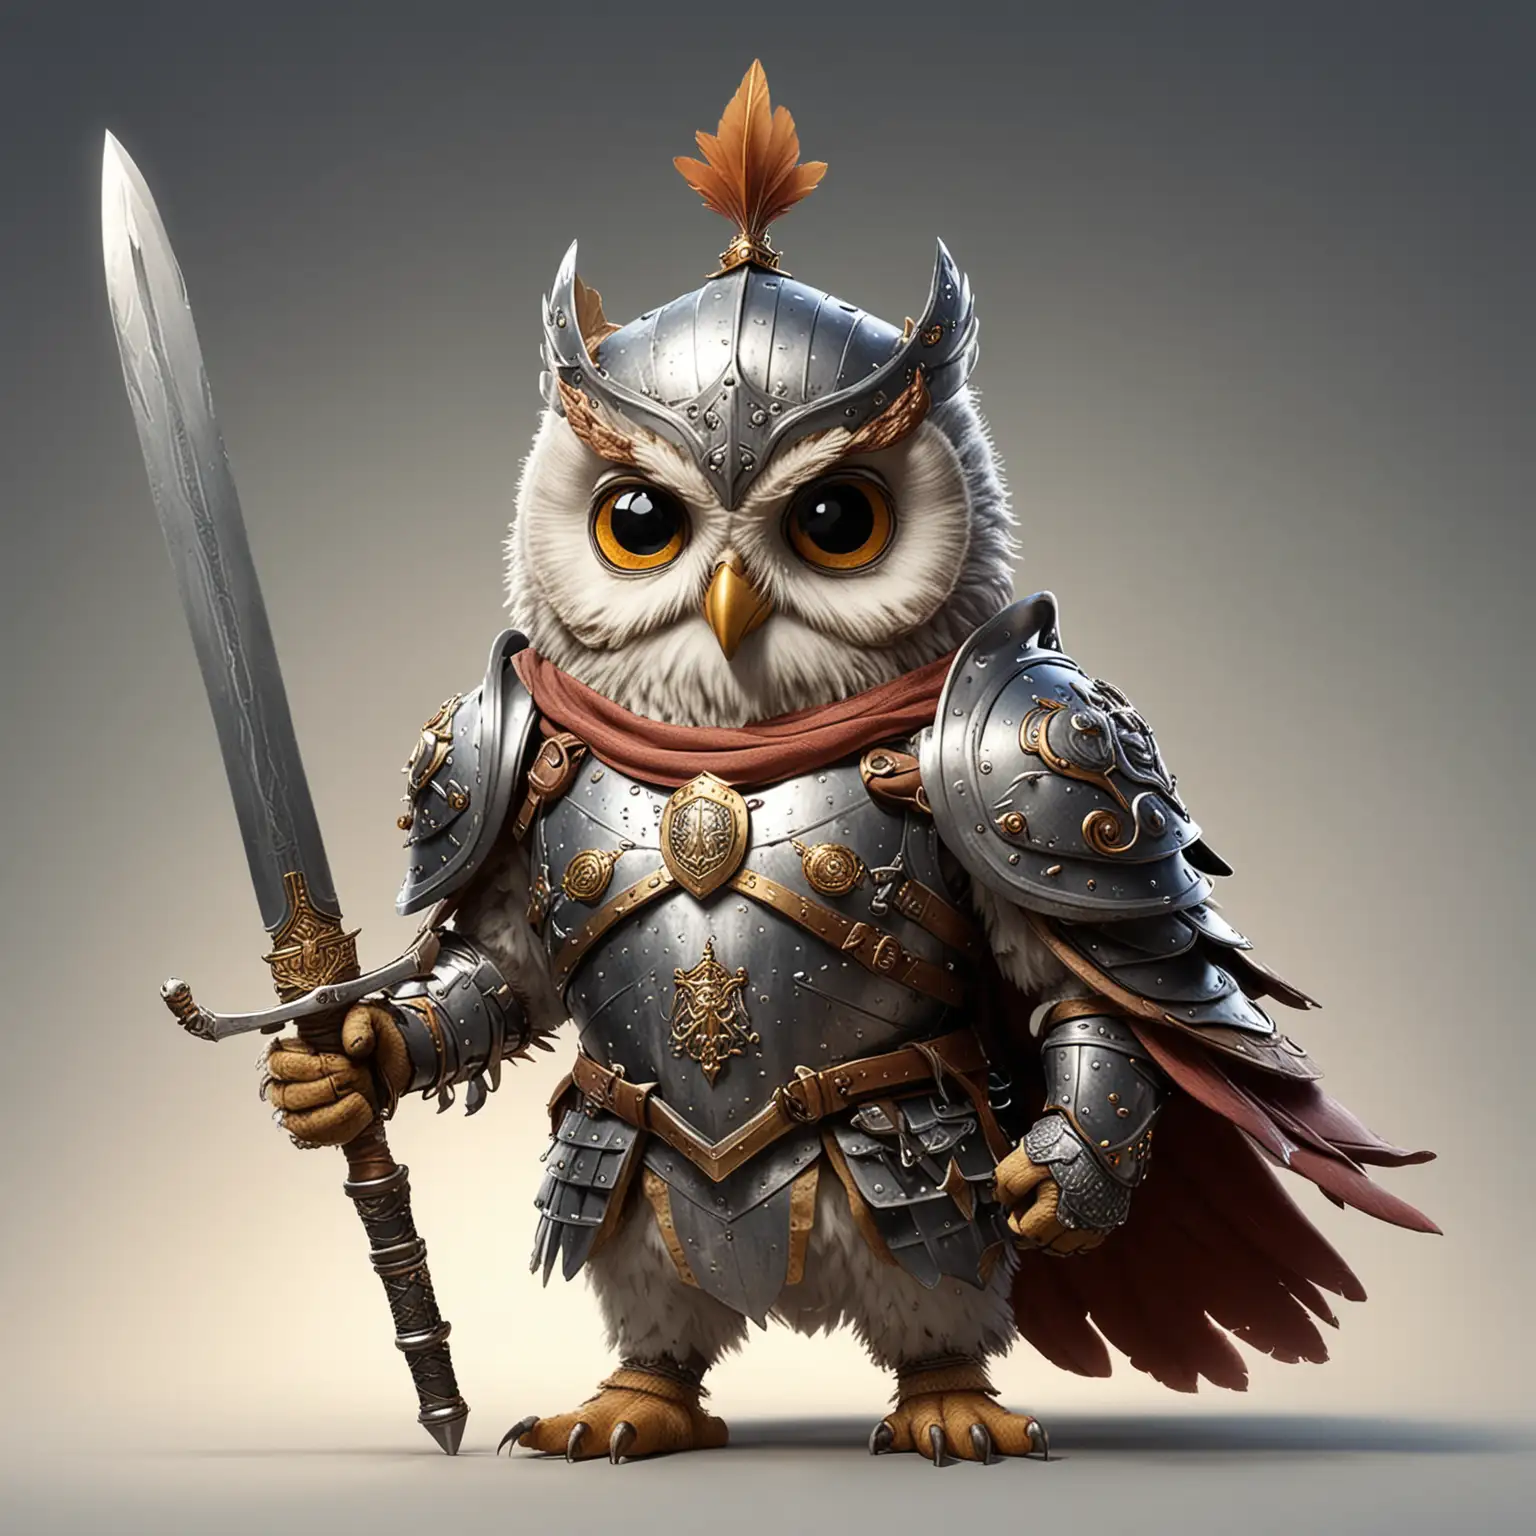 Cartoon Owl Knight with Sword in Shining Armor